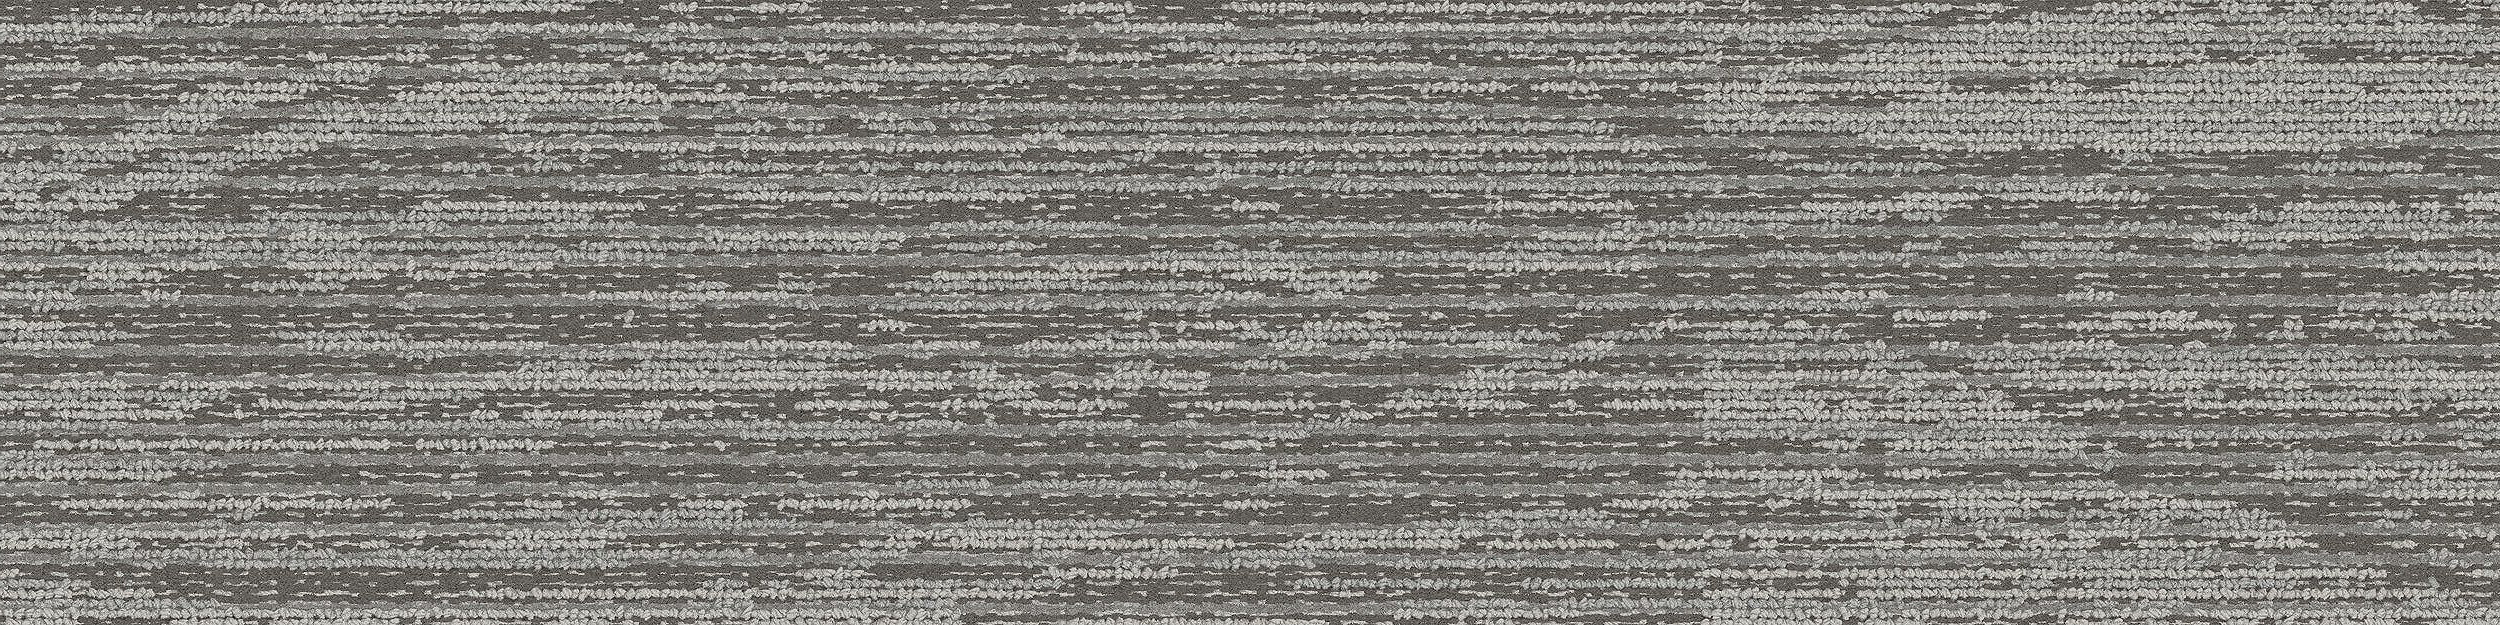 RMS 507 Carpet Tile In Taffy imagen número 6